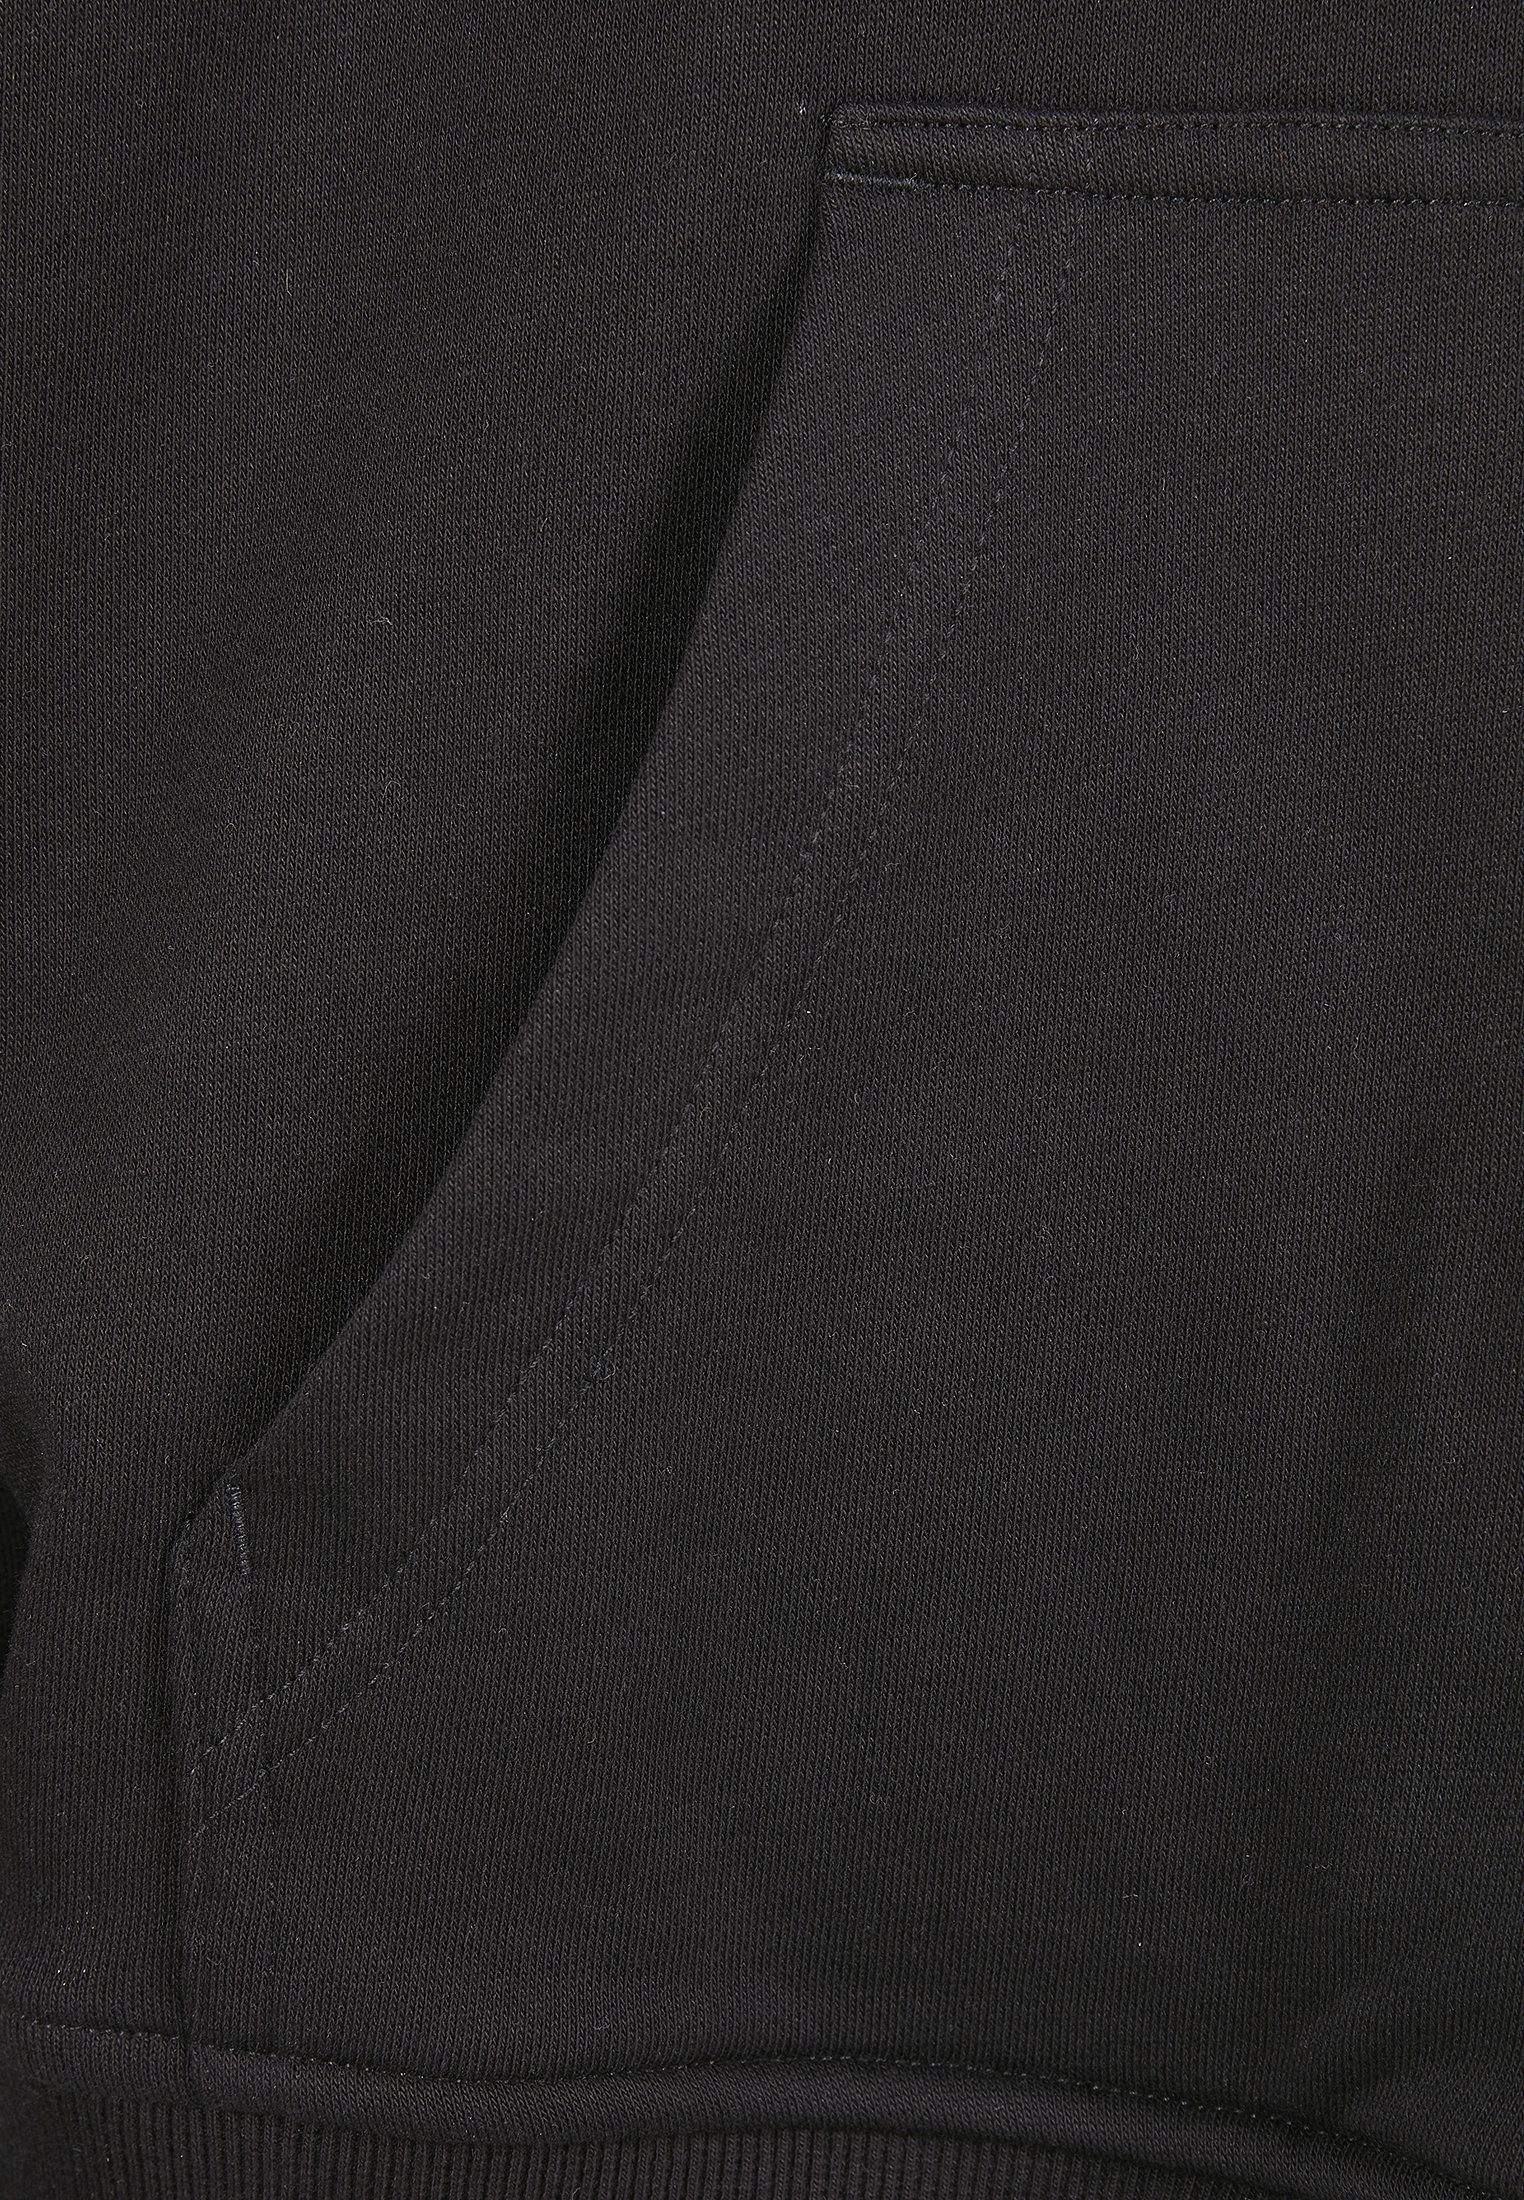 URBAN (1-tlg) black Sweater CLASSICS Herren 80's Hoody